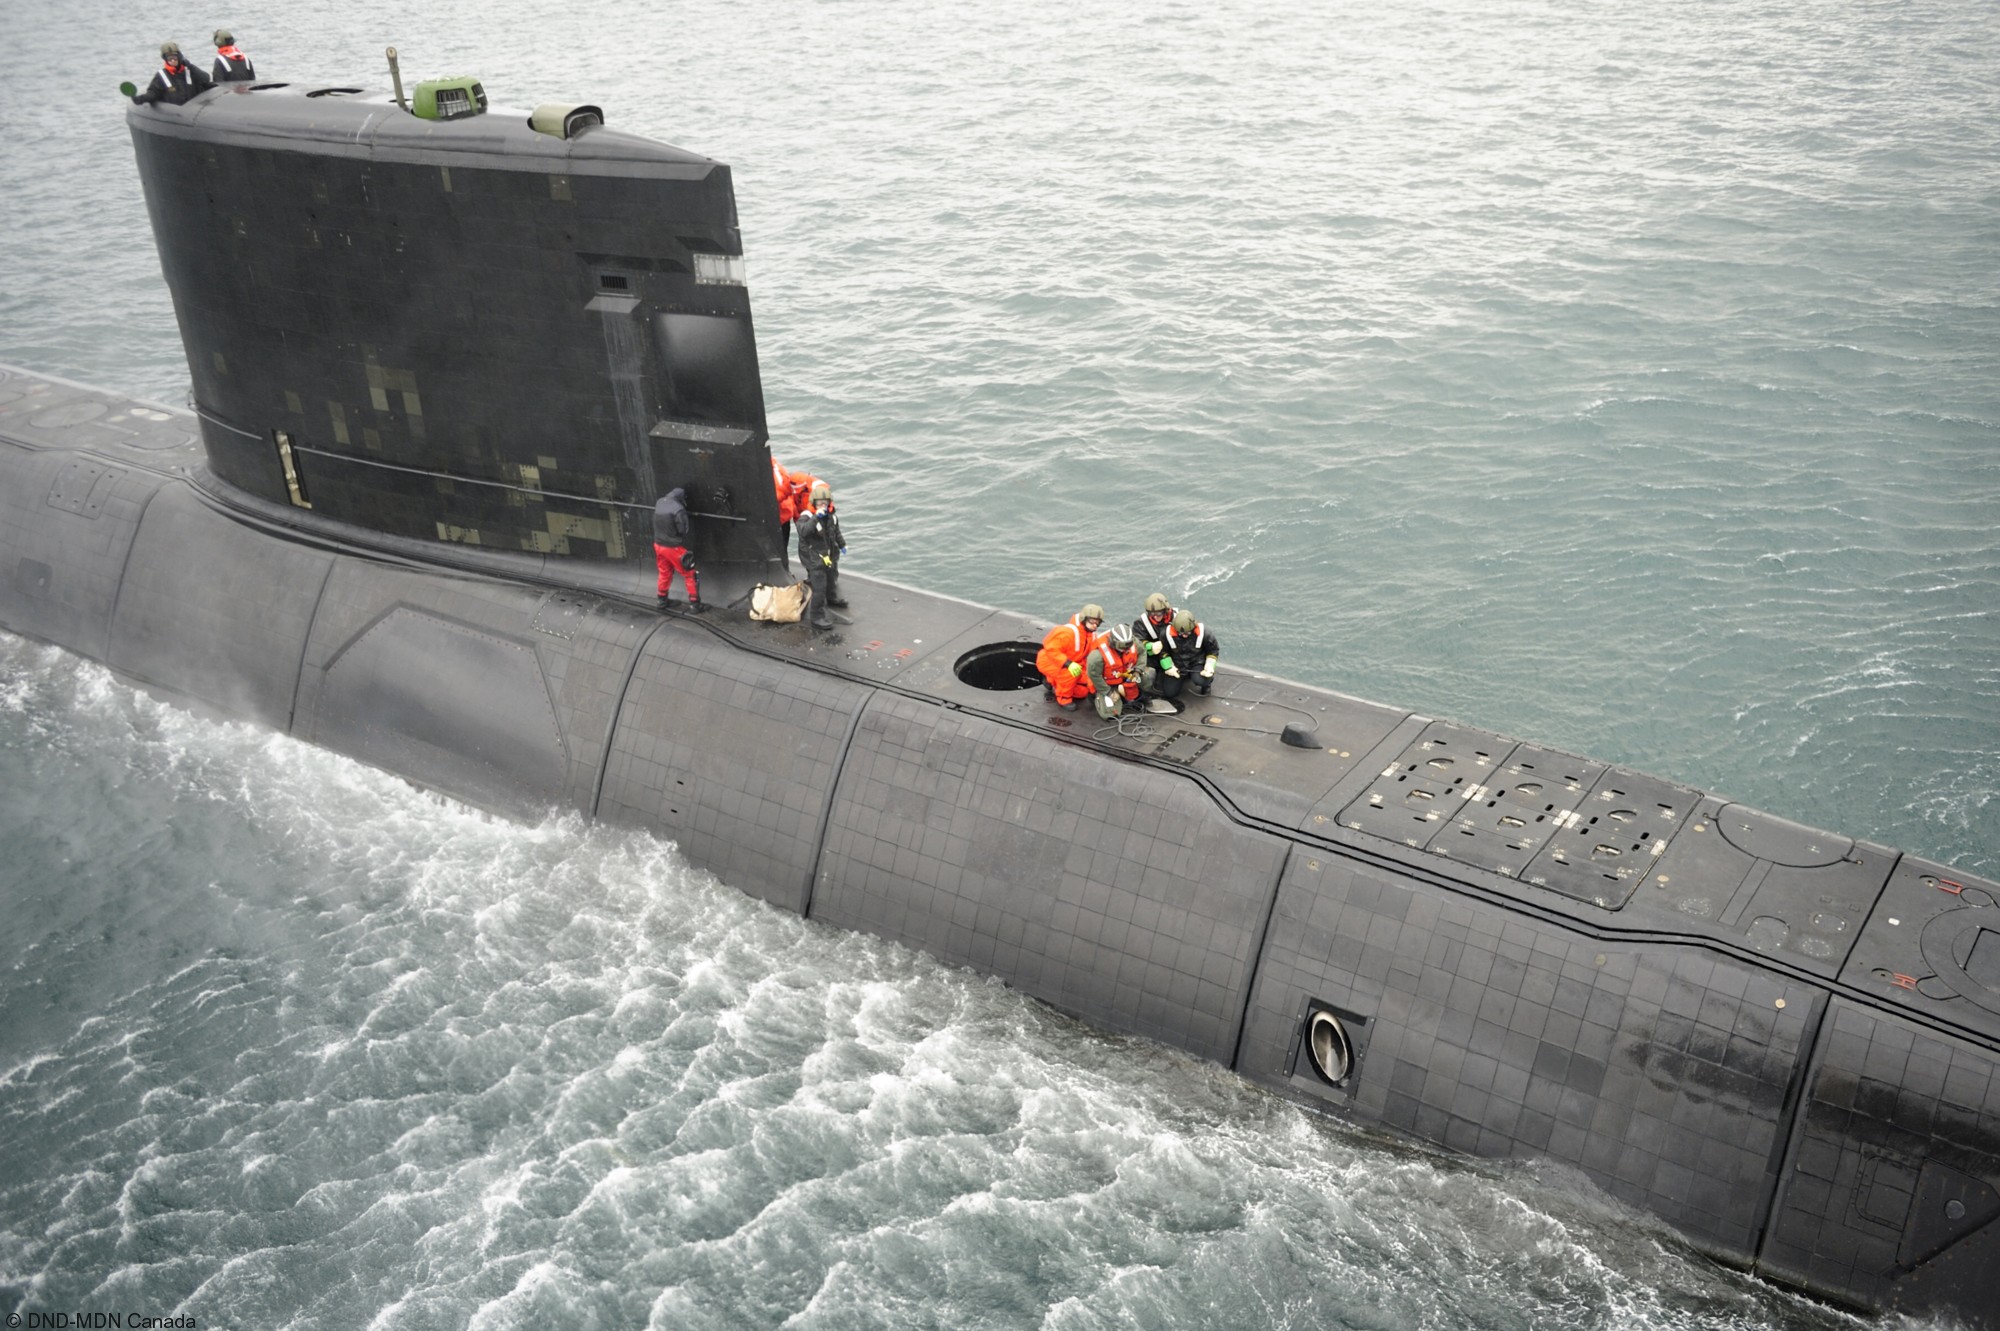 ssk-876 hmcs victoria upholder class attack submarine hunter killer ncsm royal canadian navy 32